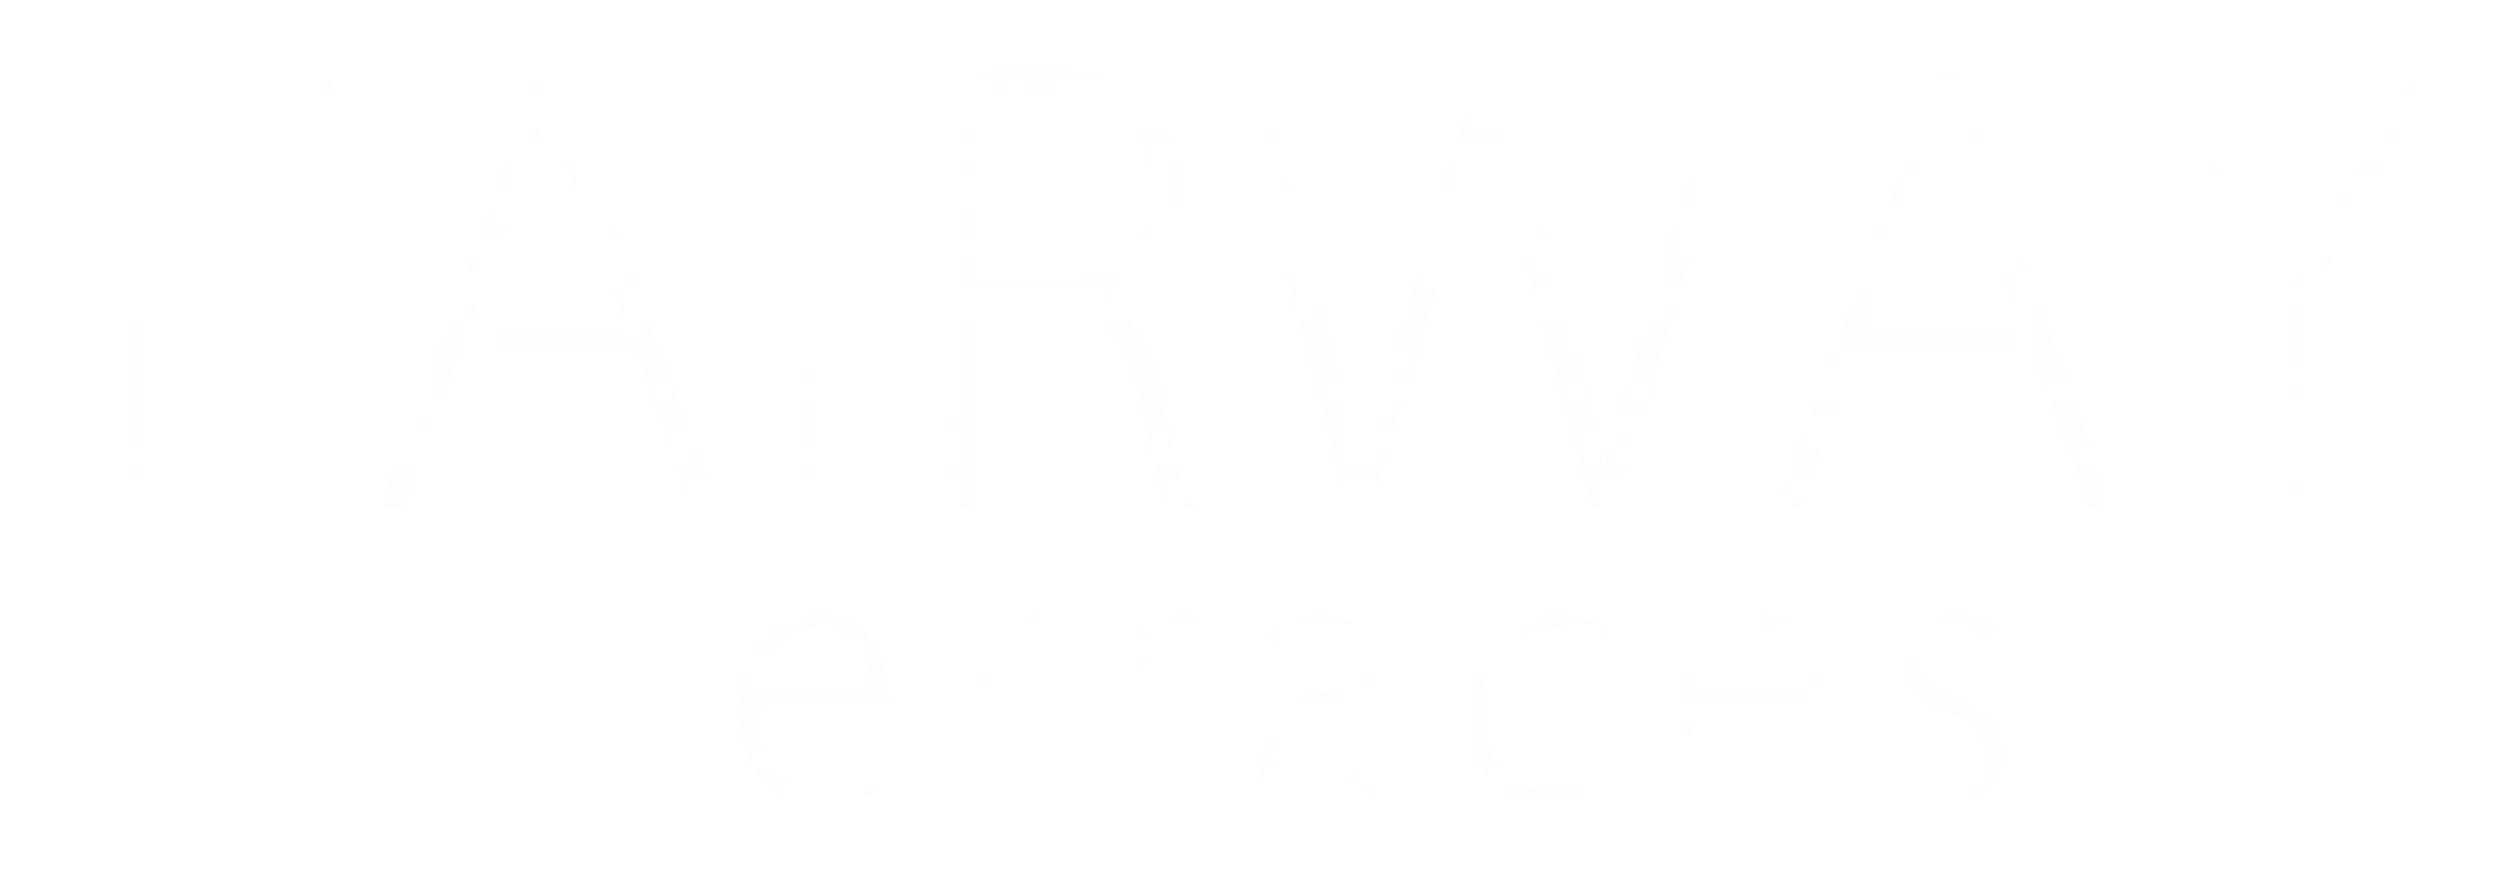 Fairway Terraces